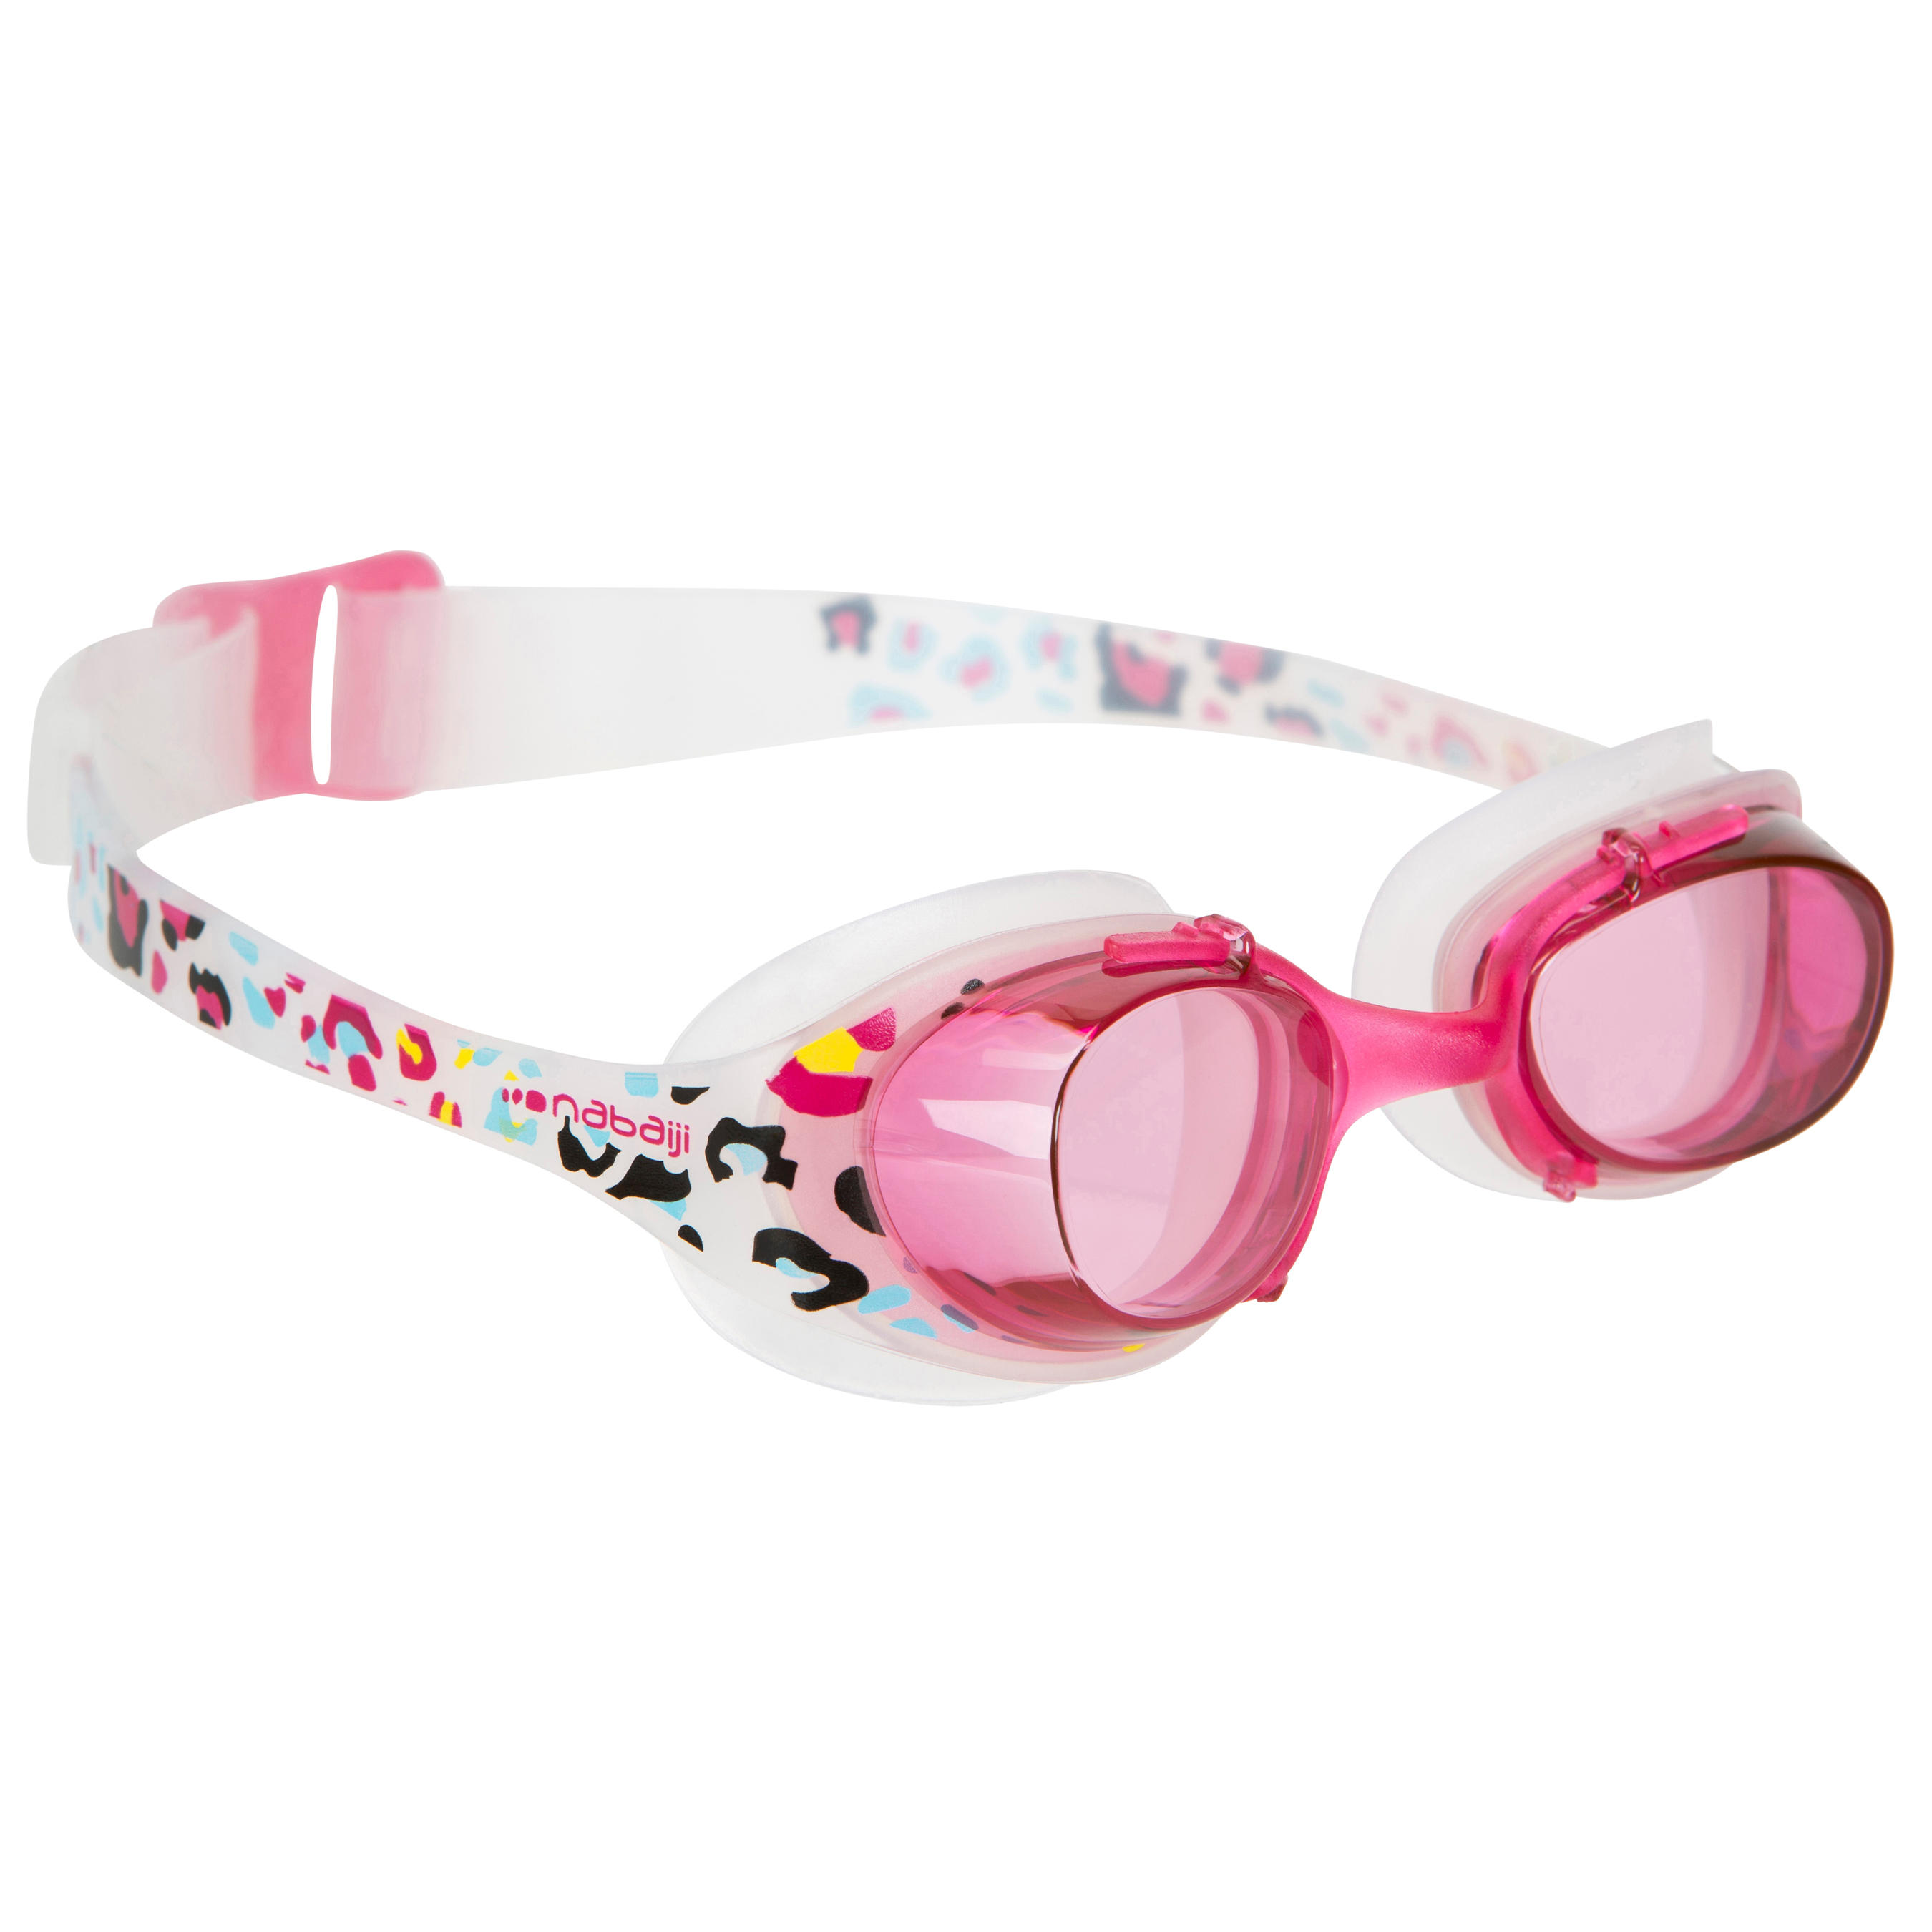 NABAIJI XBASE JUNIOR ANI swimming goggles - White Pink